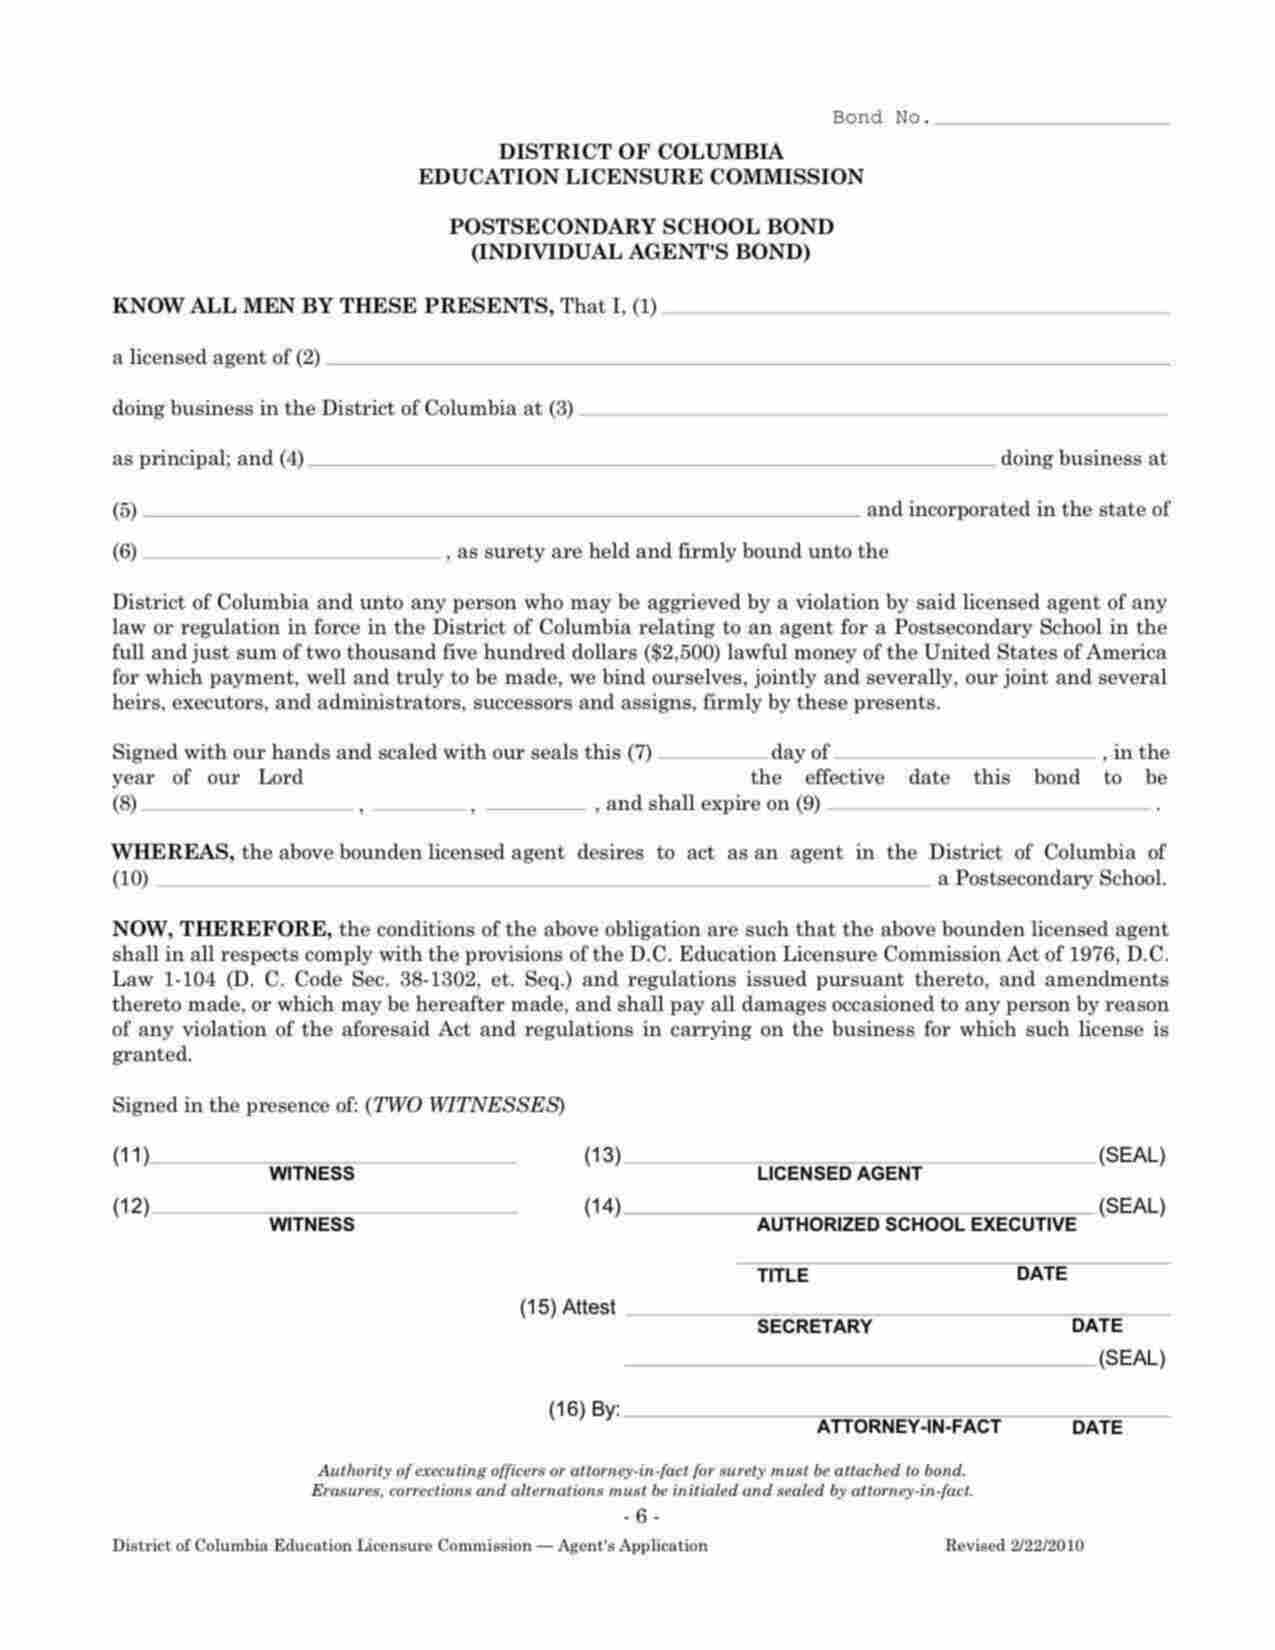 District of Columbia Postsecondary School Individual Agent Bond Form